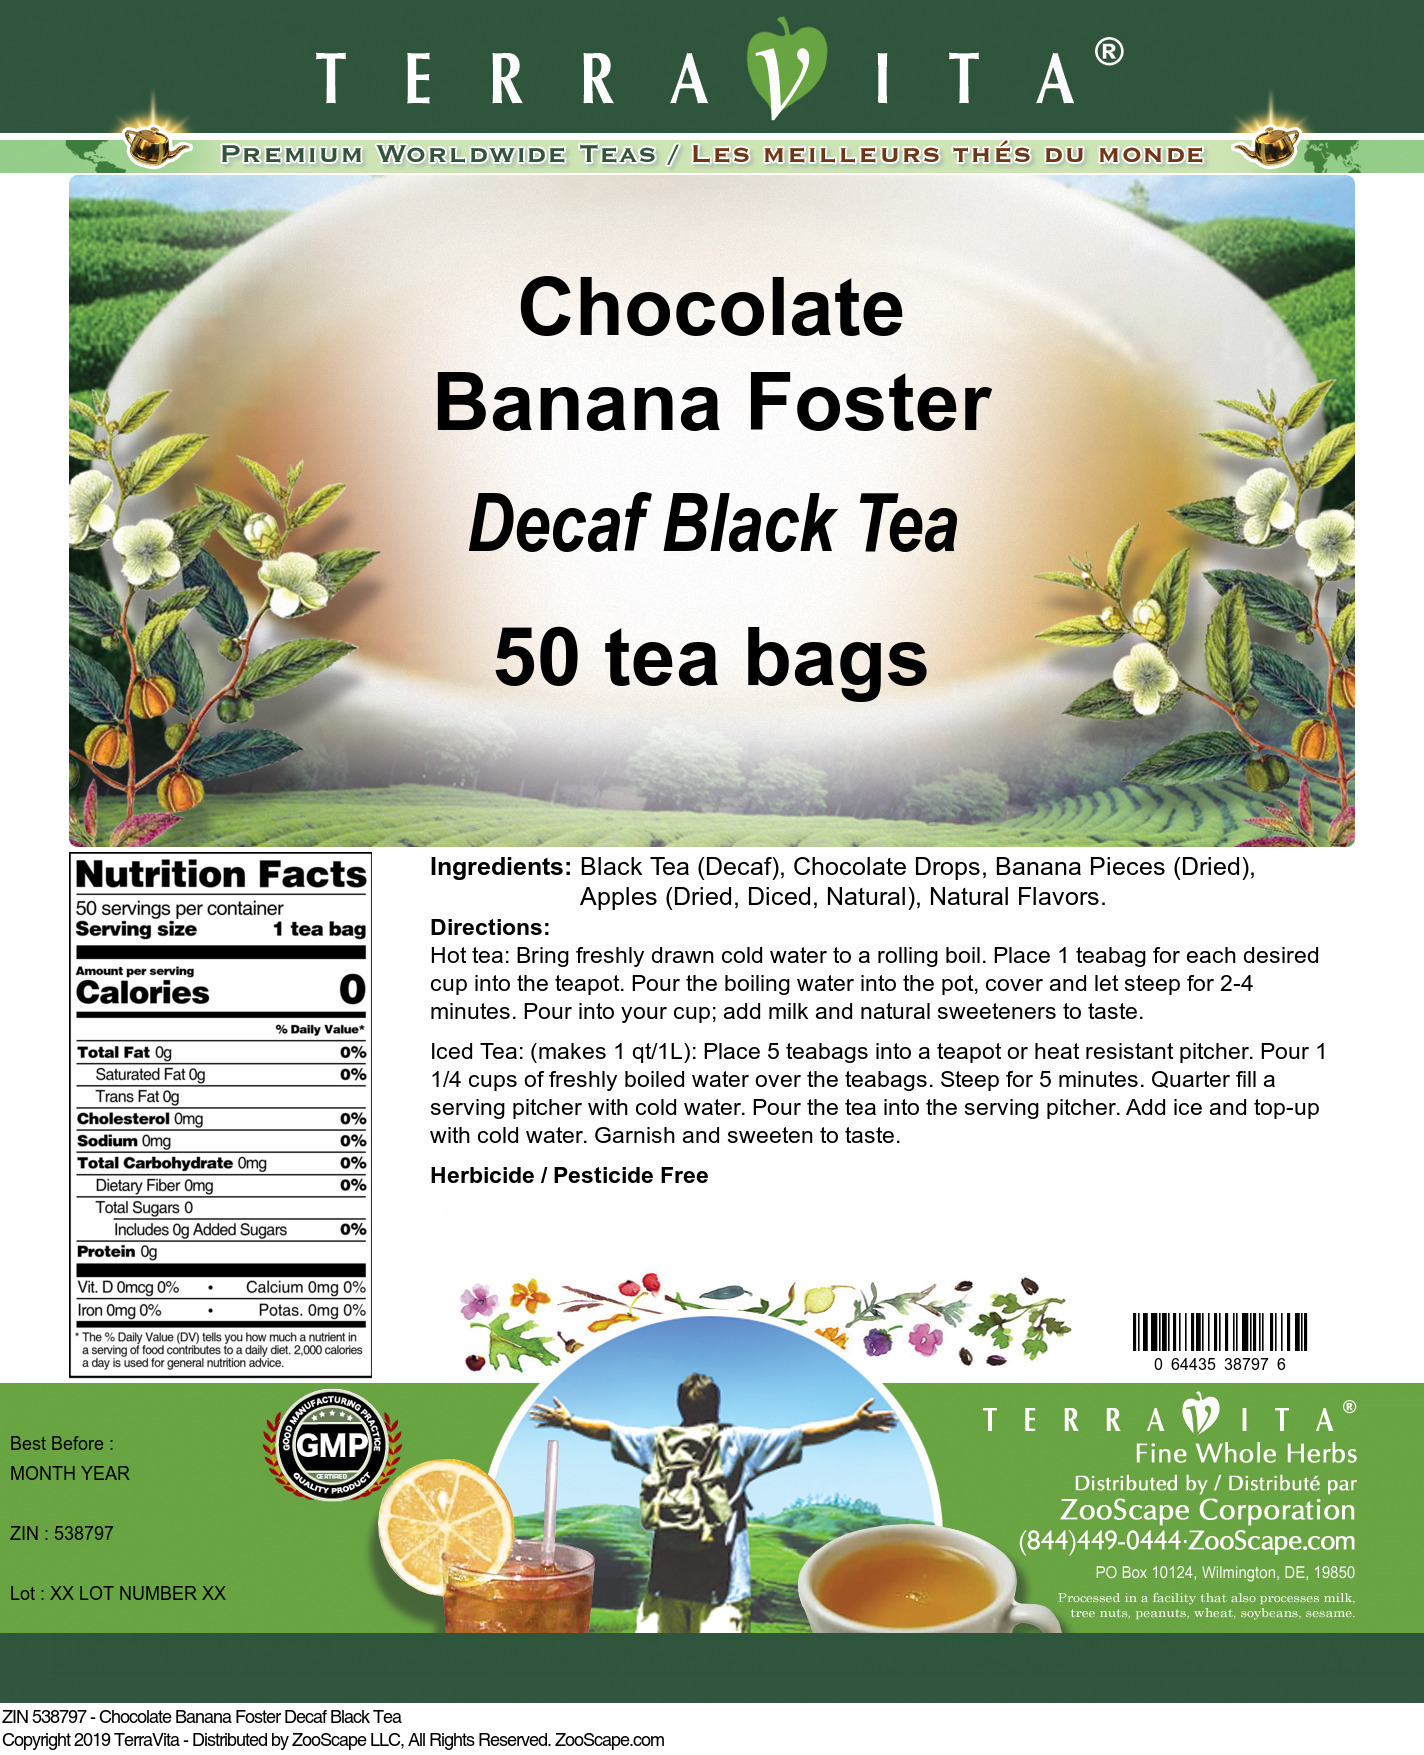 Chocolate Banana Foster Decaf Black Tea - Label